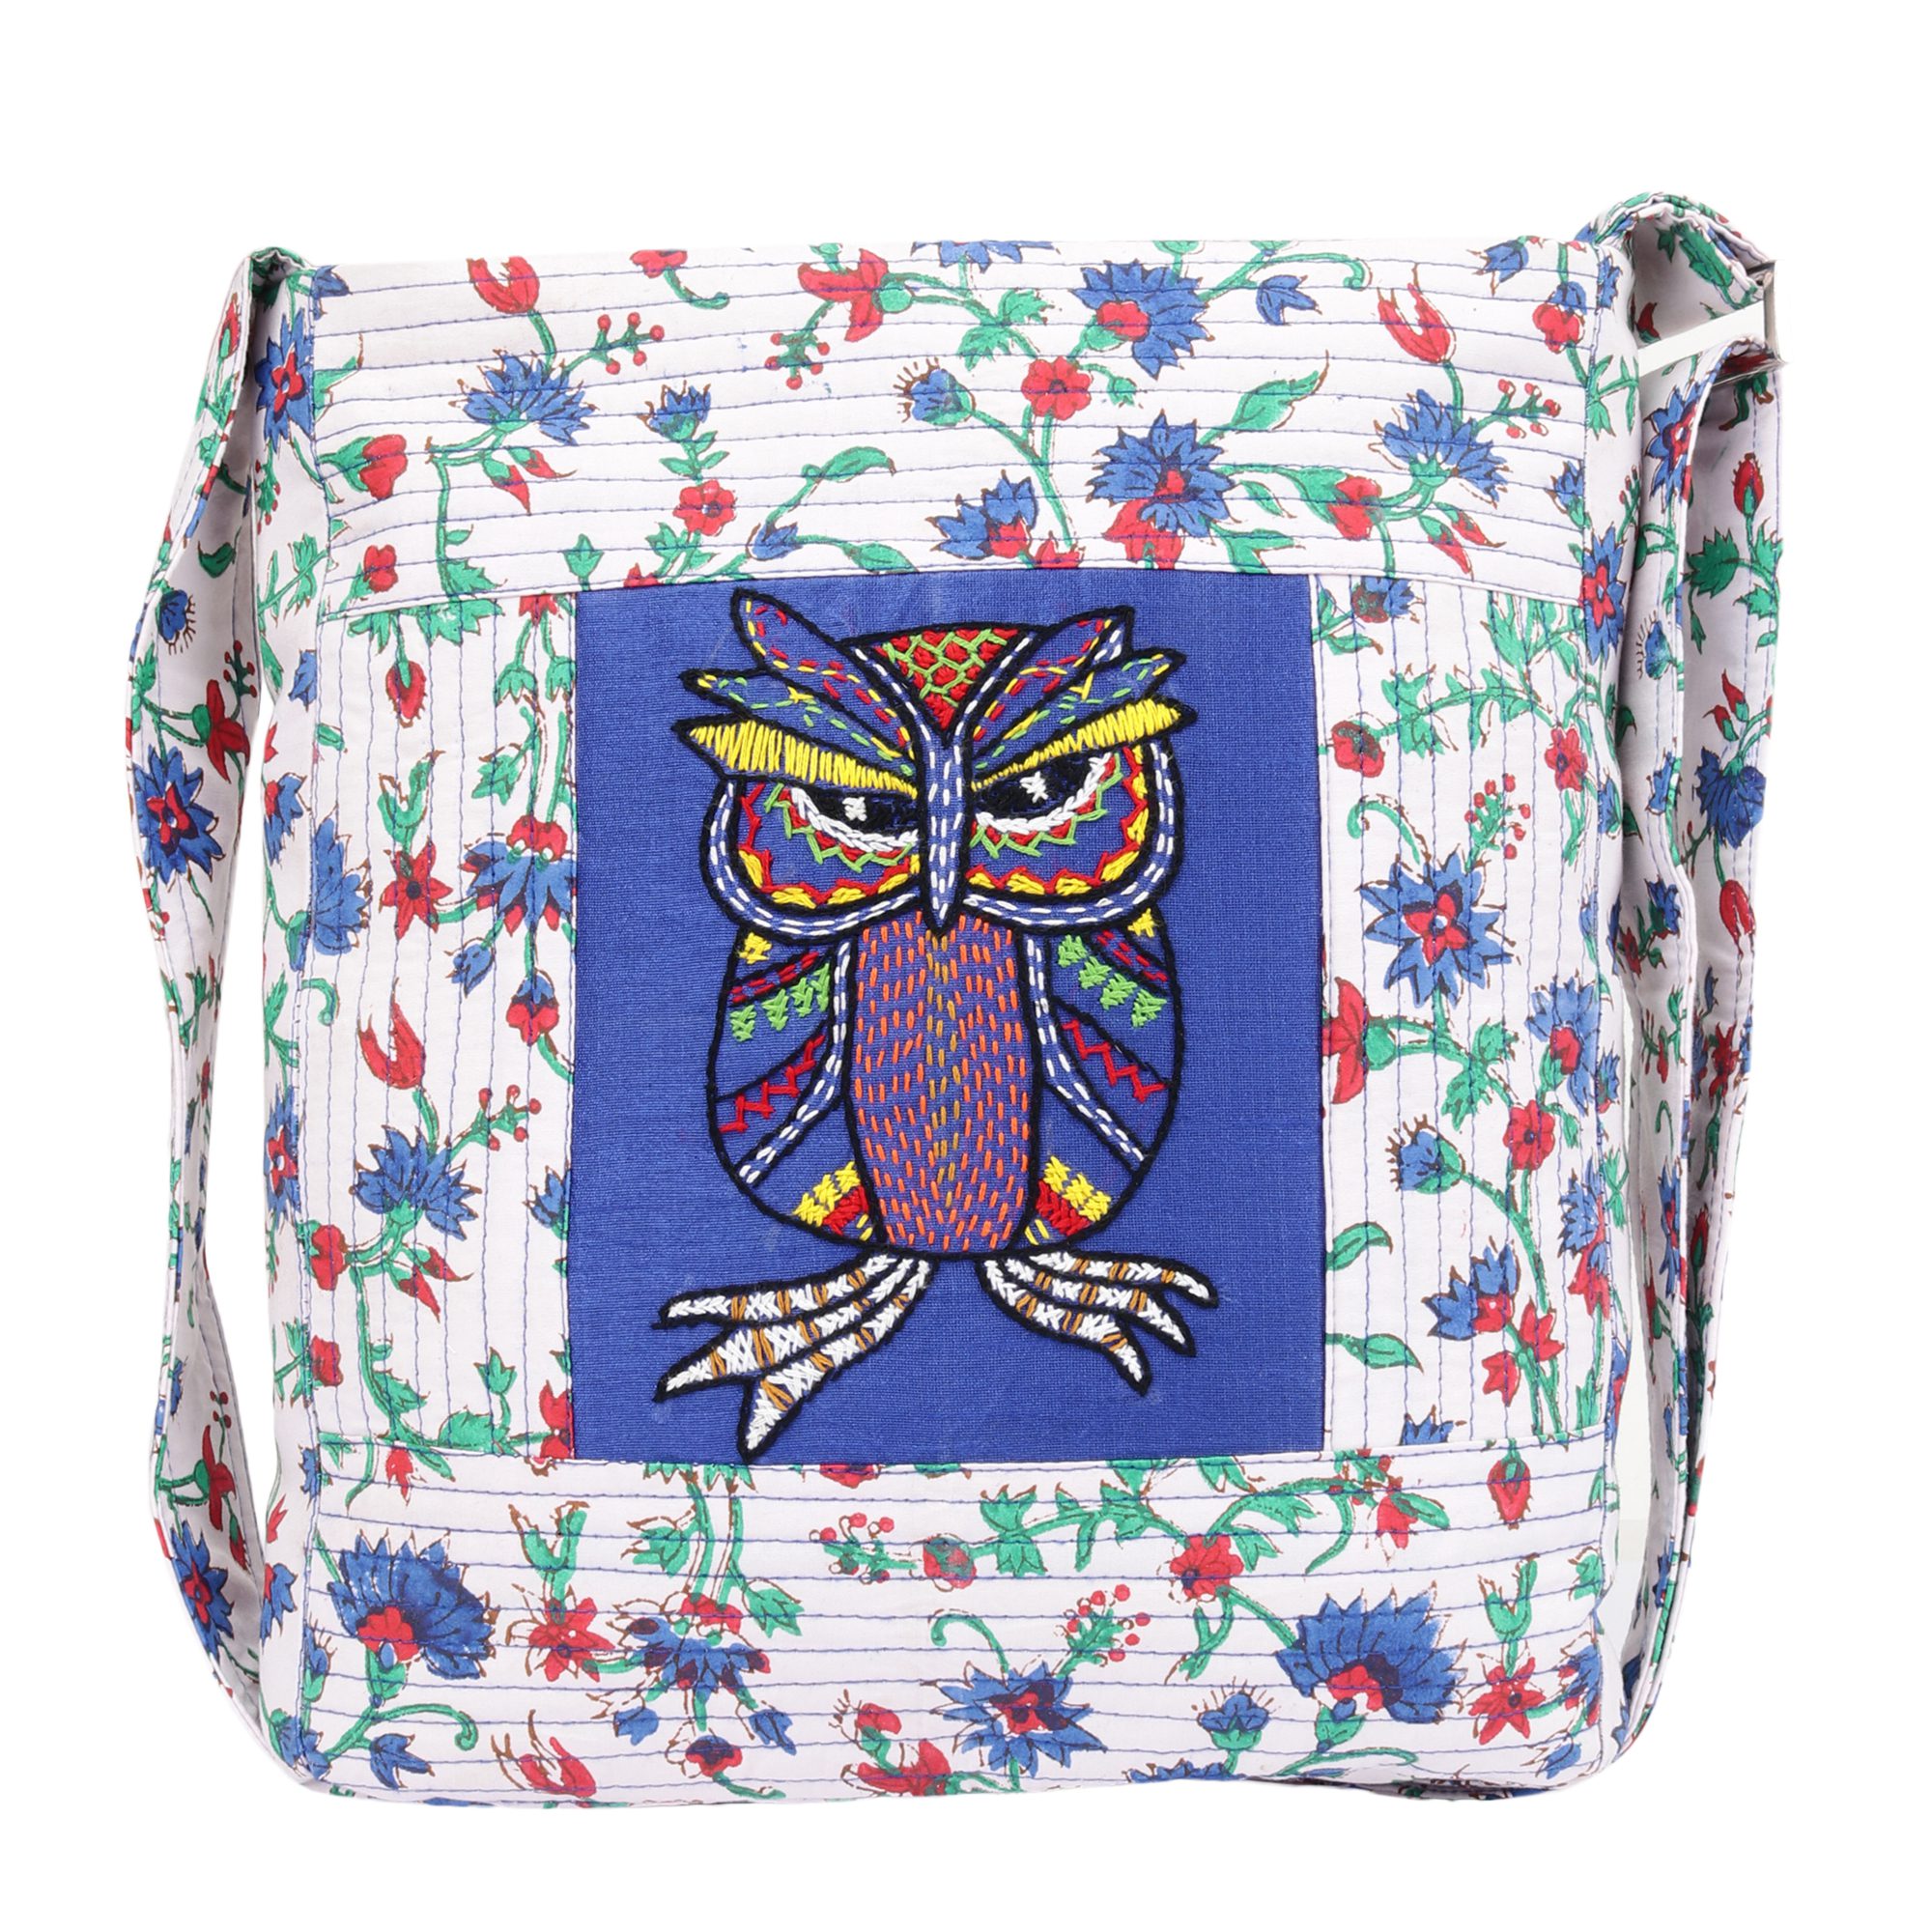 Owl Boho Purse/Bag | Boho purses, Bags, Purses